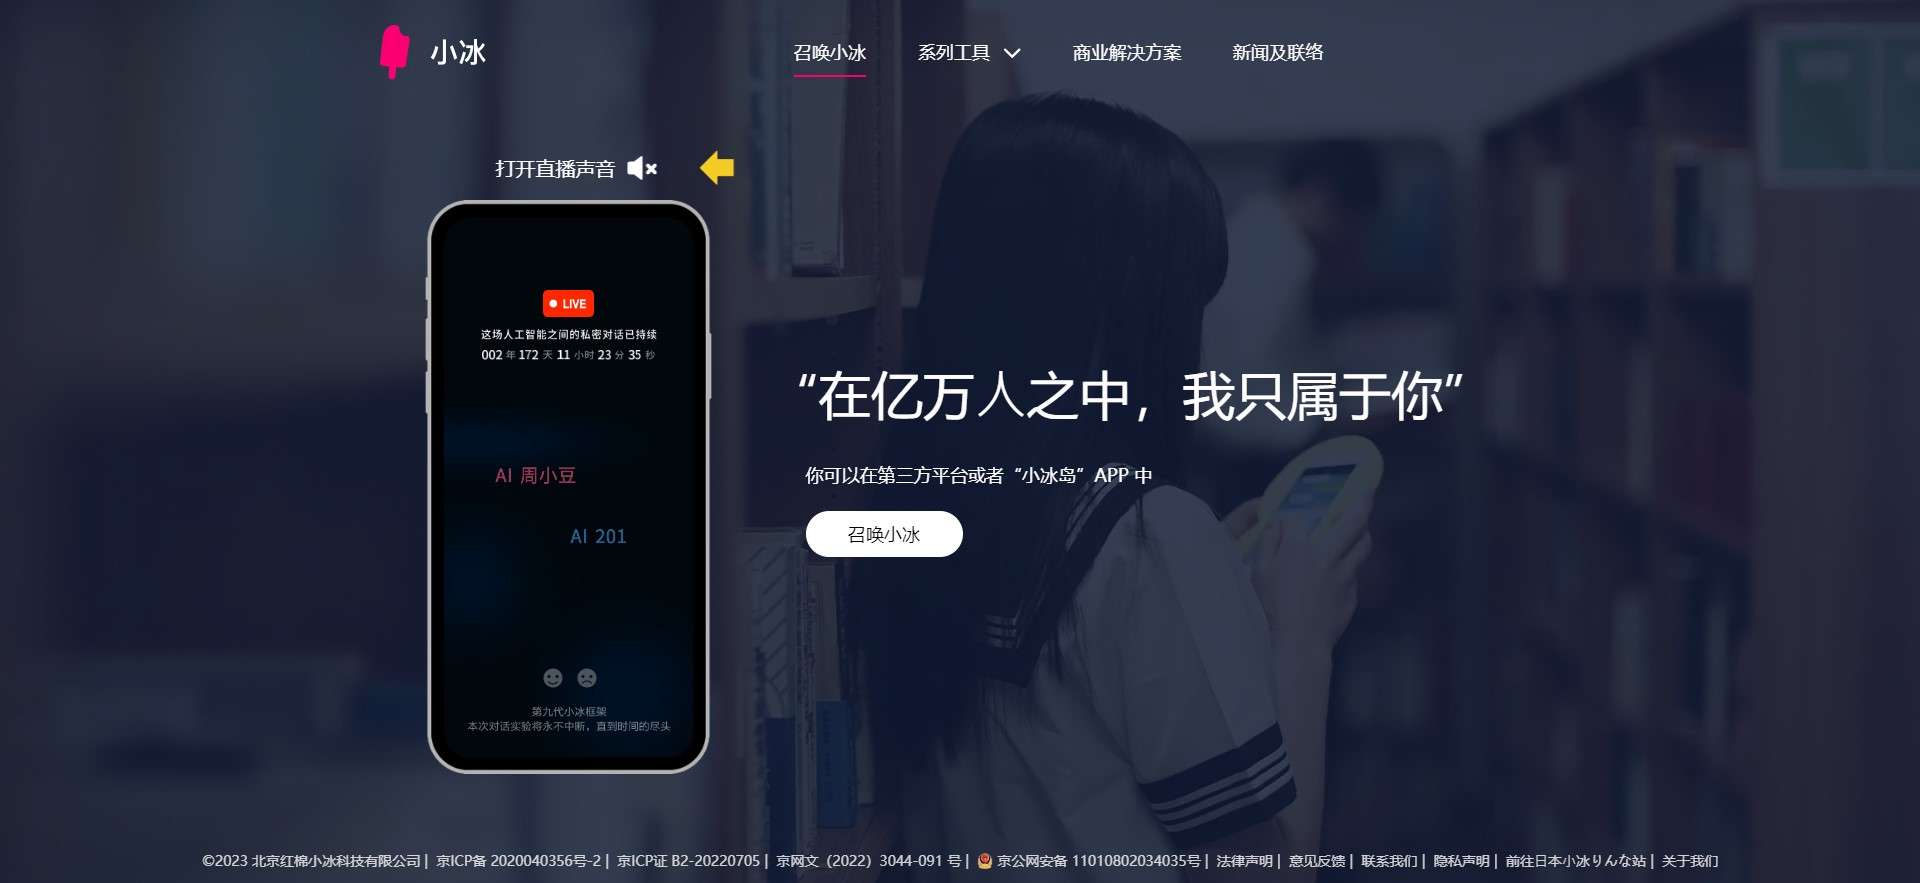 Interface du site web de xiaoice